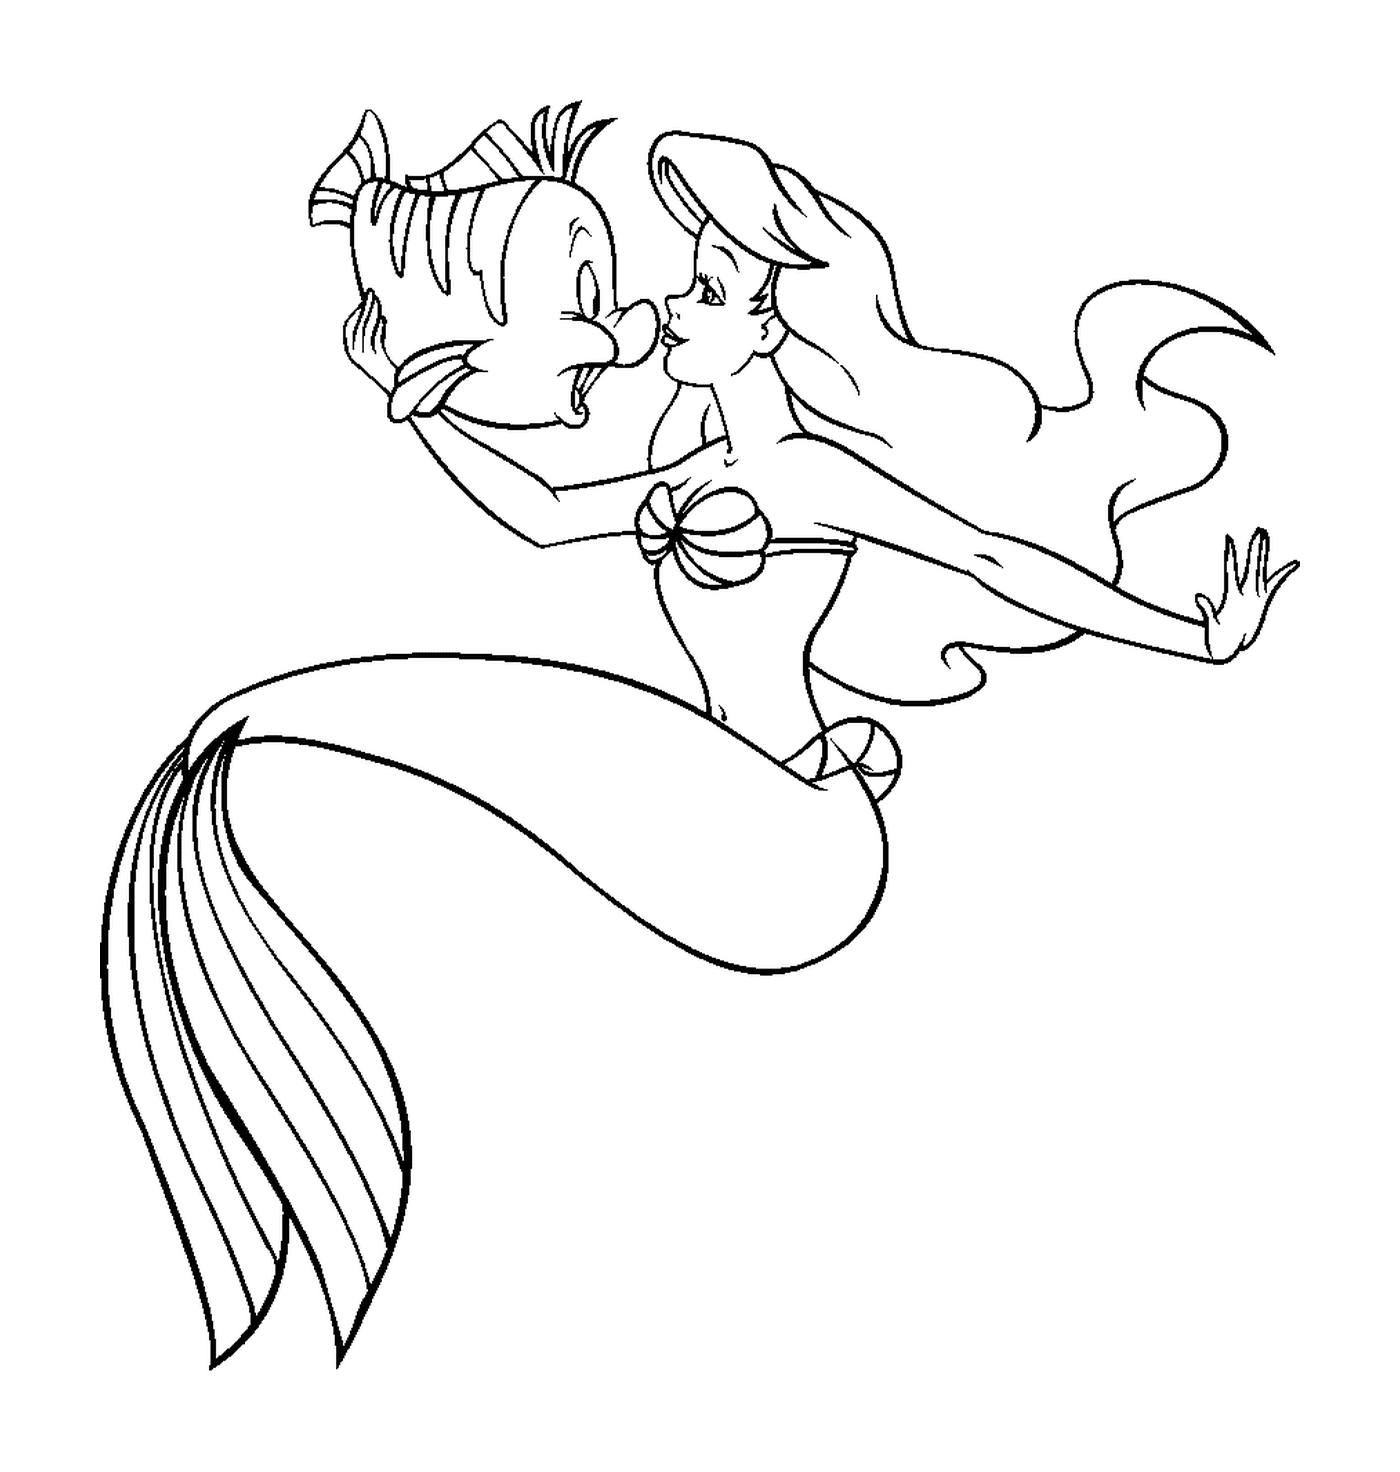  A mermaid kissing a fish 